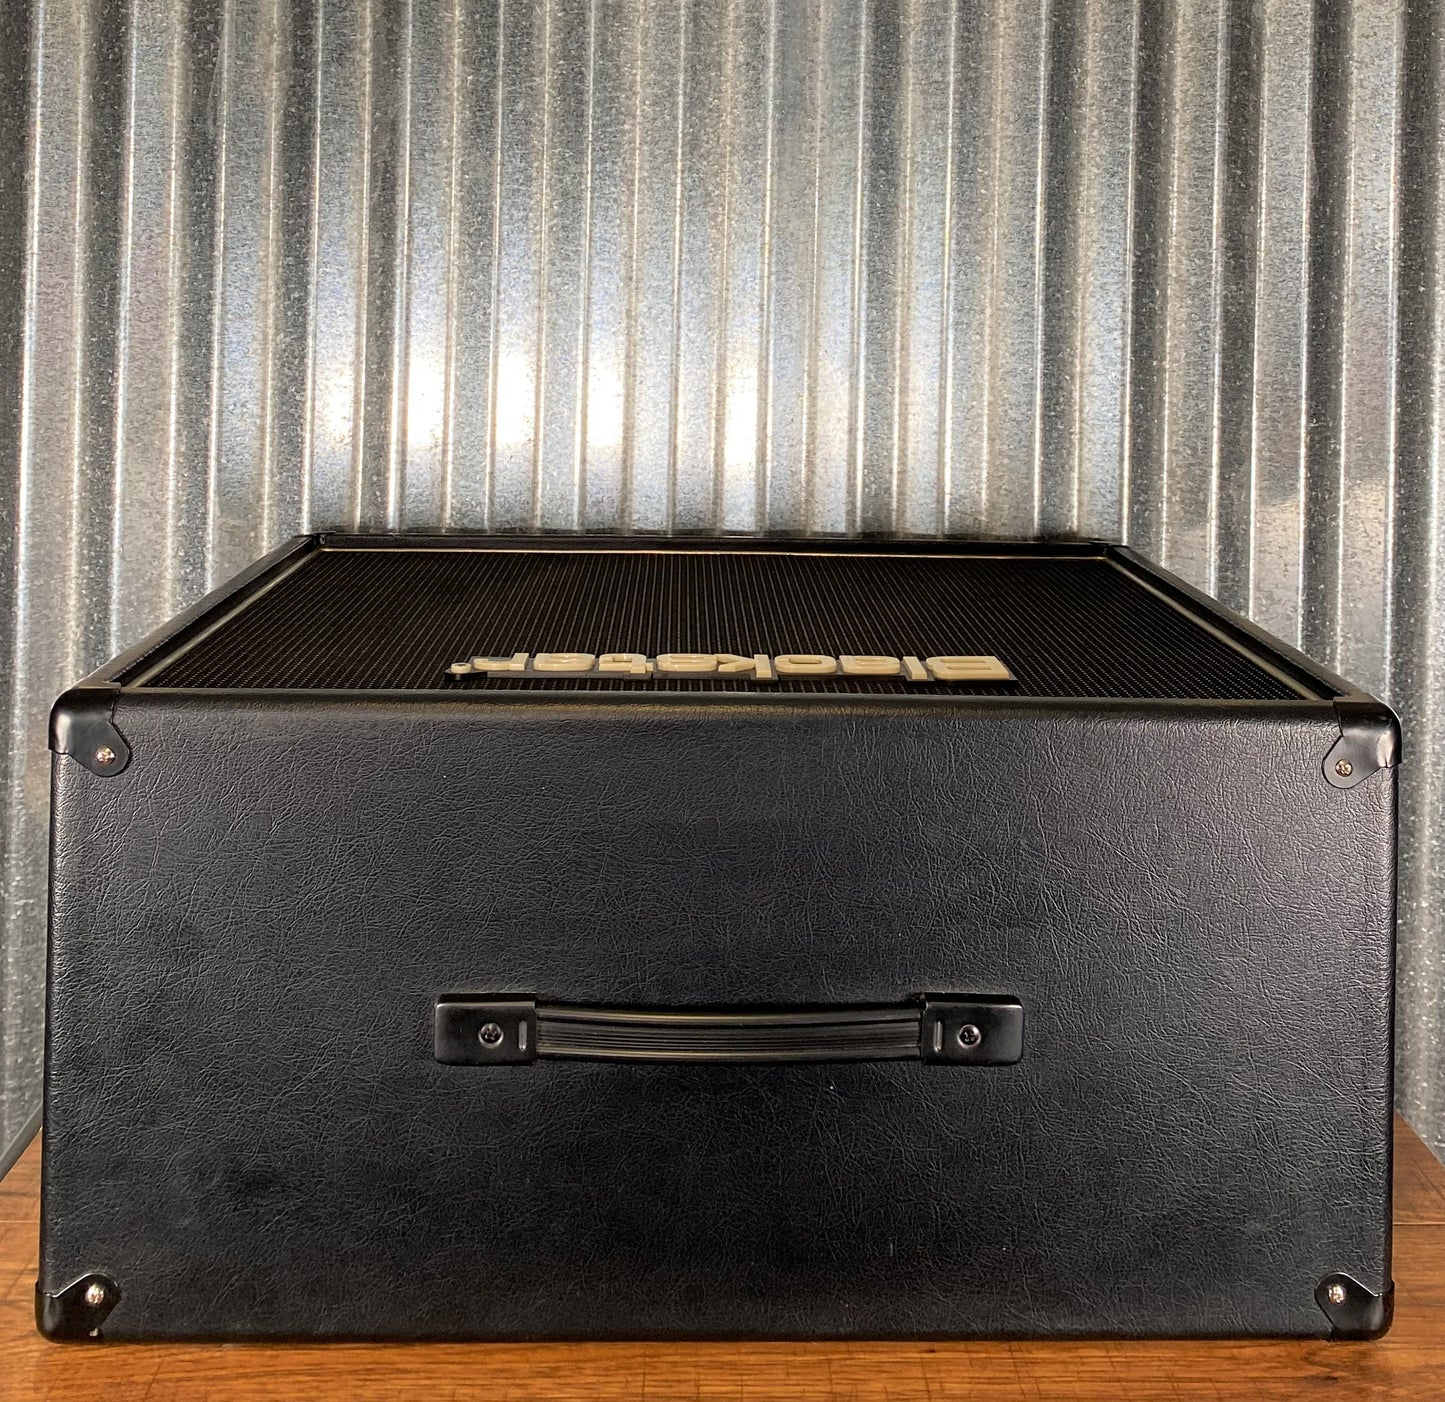 Blackstar Amplification HTV-112 80 Watt 16 Ohm 1x12" Celestion Guitar Amplifier Extension Cabinet Black Used